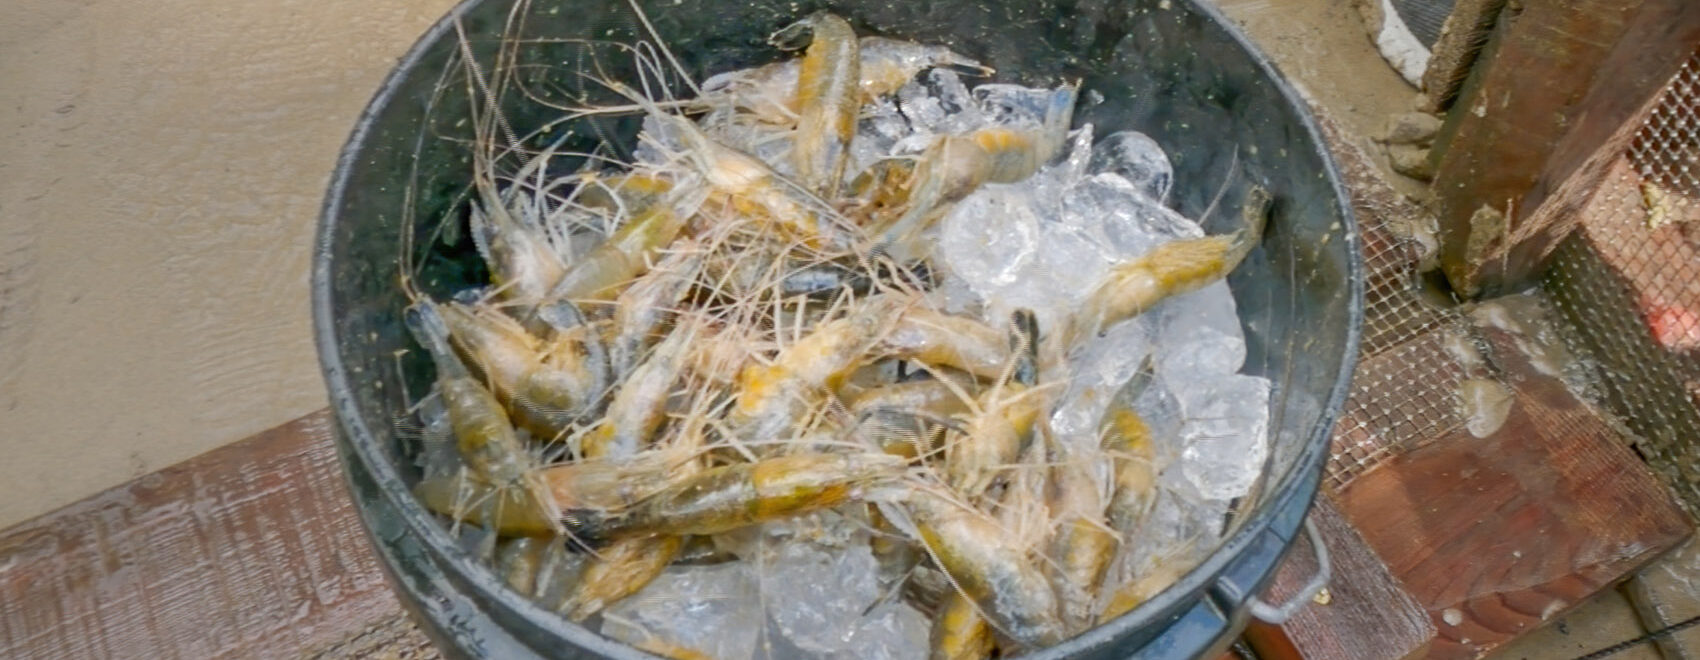 fresh river shrimp on ice in bucket